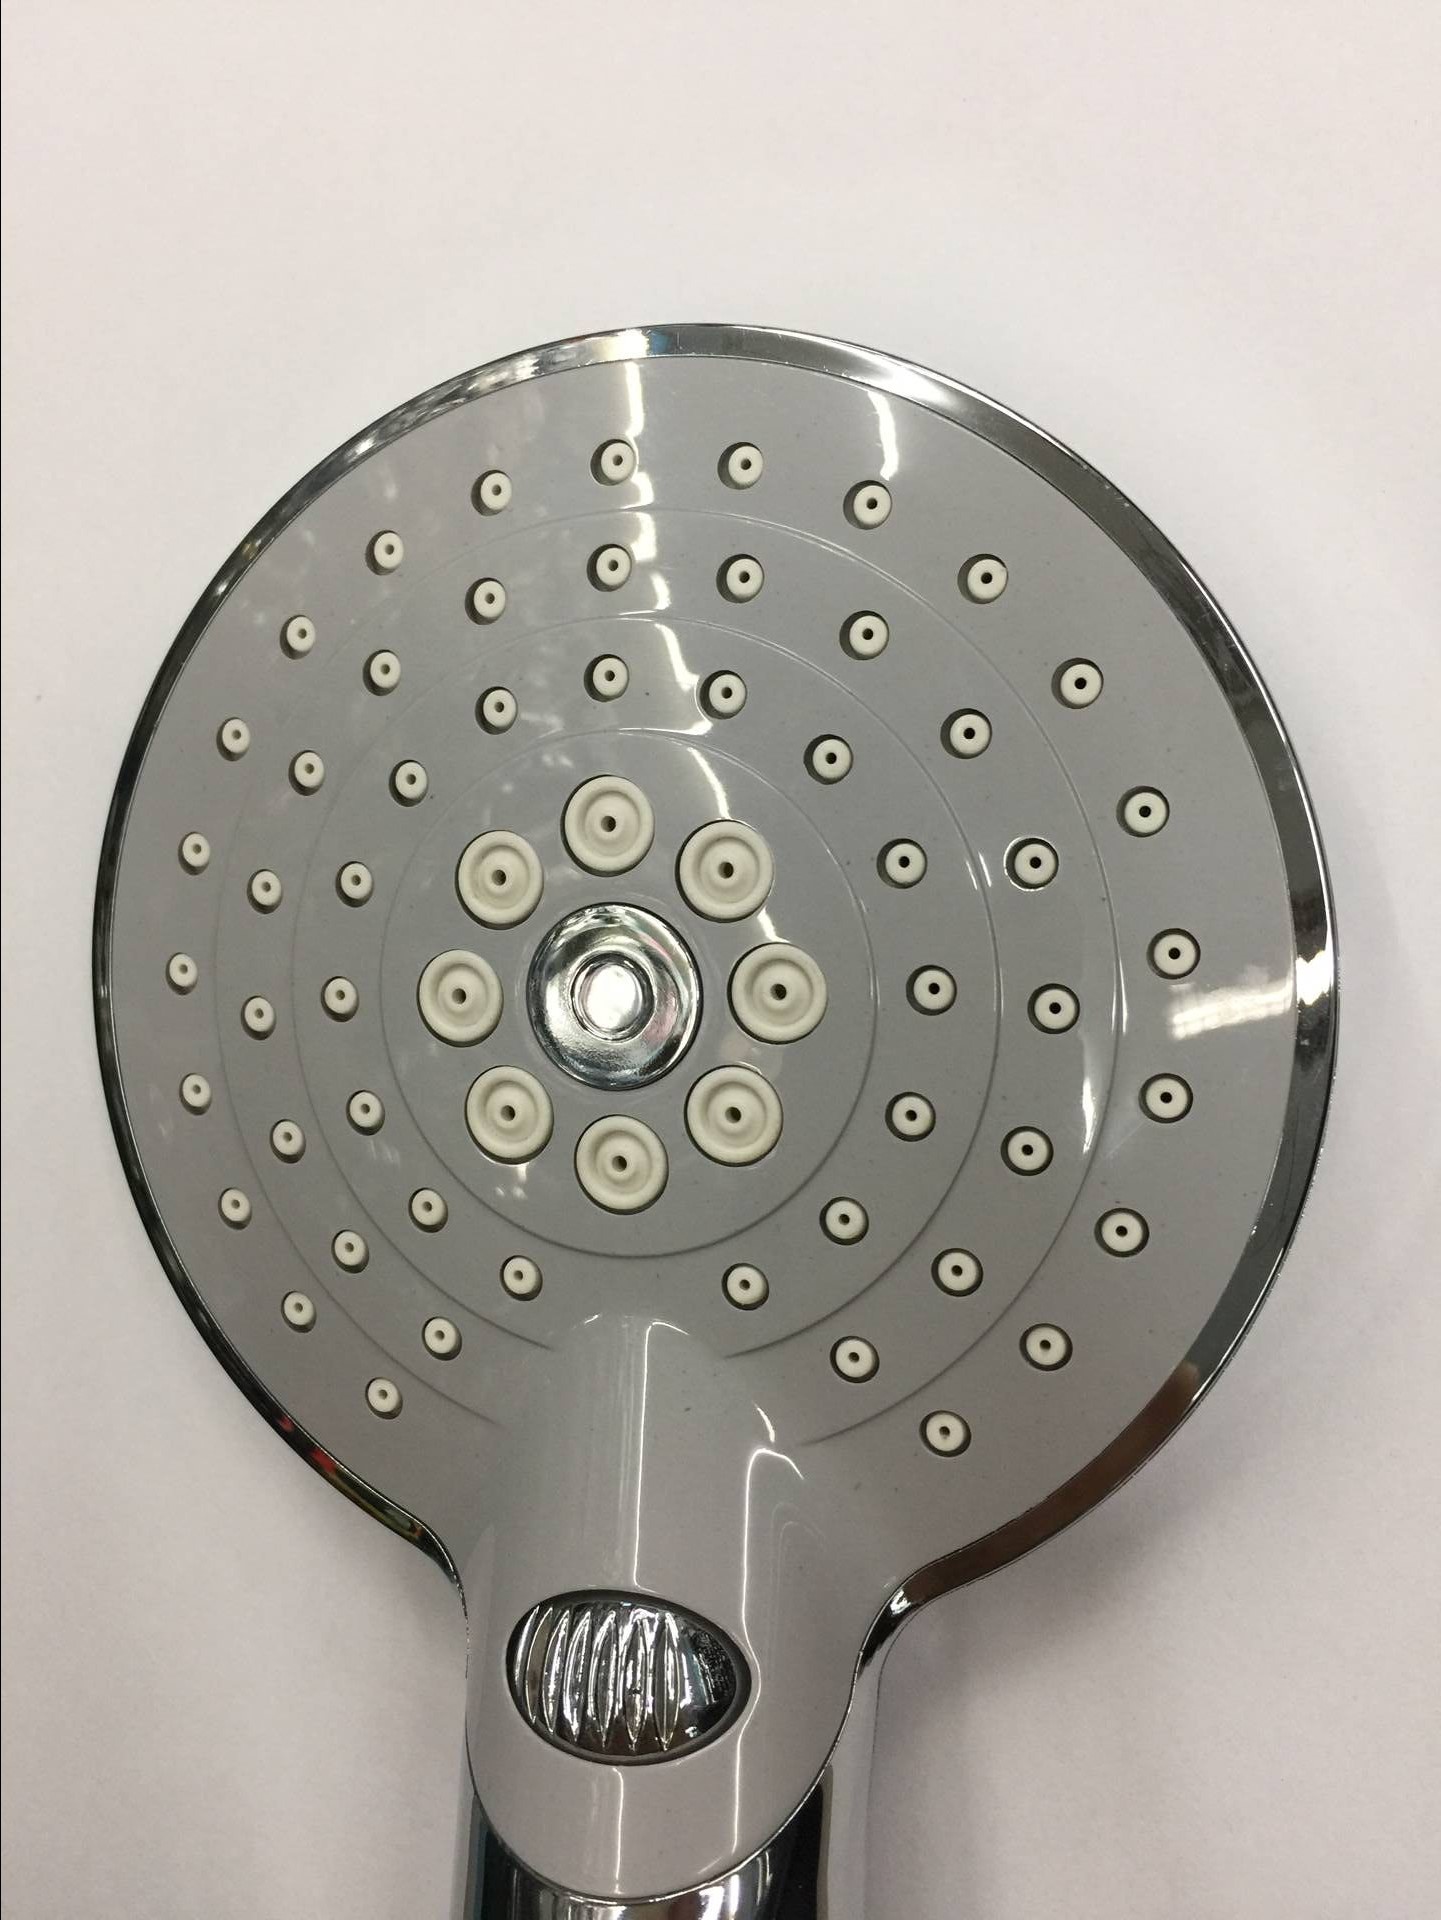 NEW shower多功能电镀滑轮喷头花洒卫浴MS-1001细节图